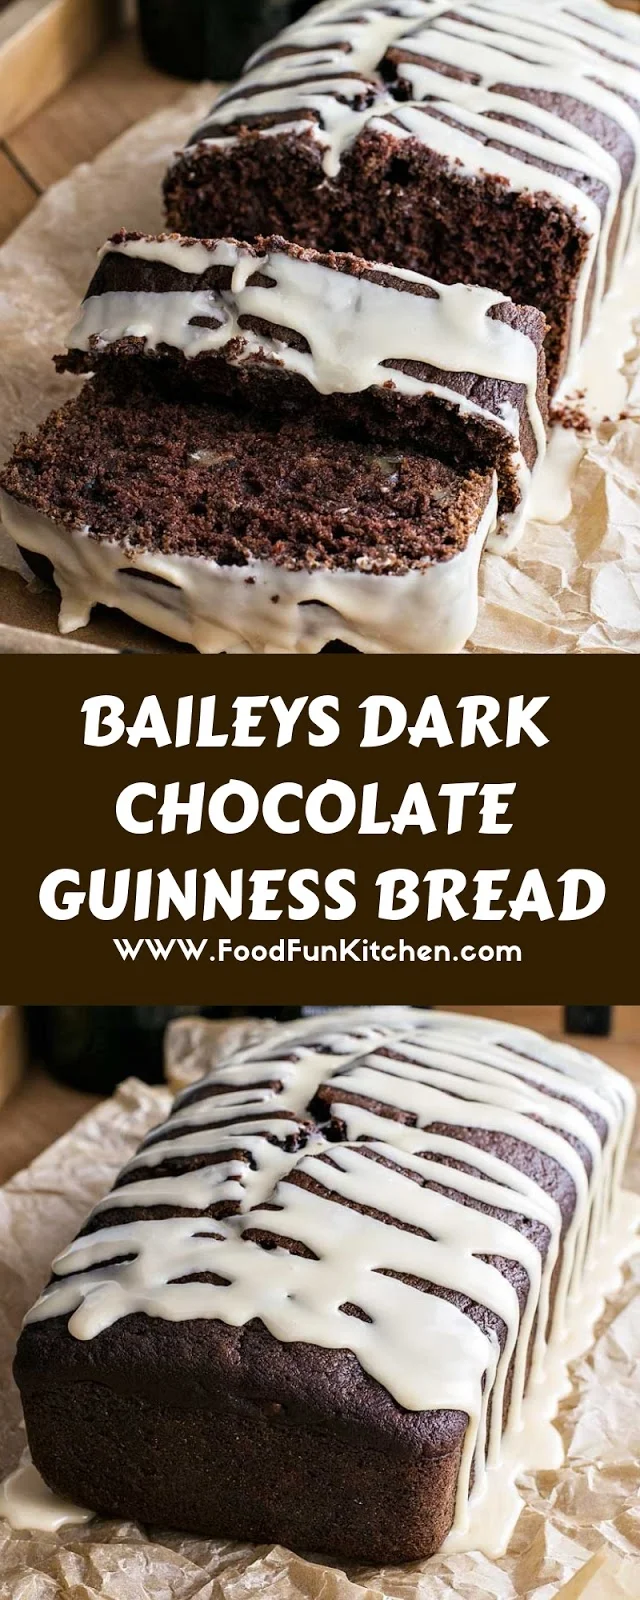 BAILEYS DARK CHOCOLATE GUINNESS BREAD